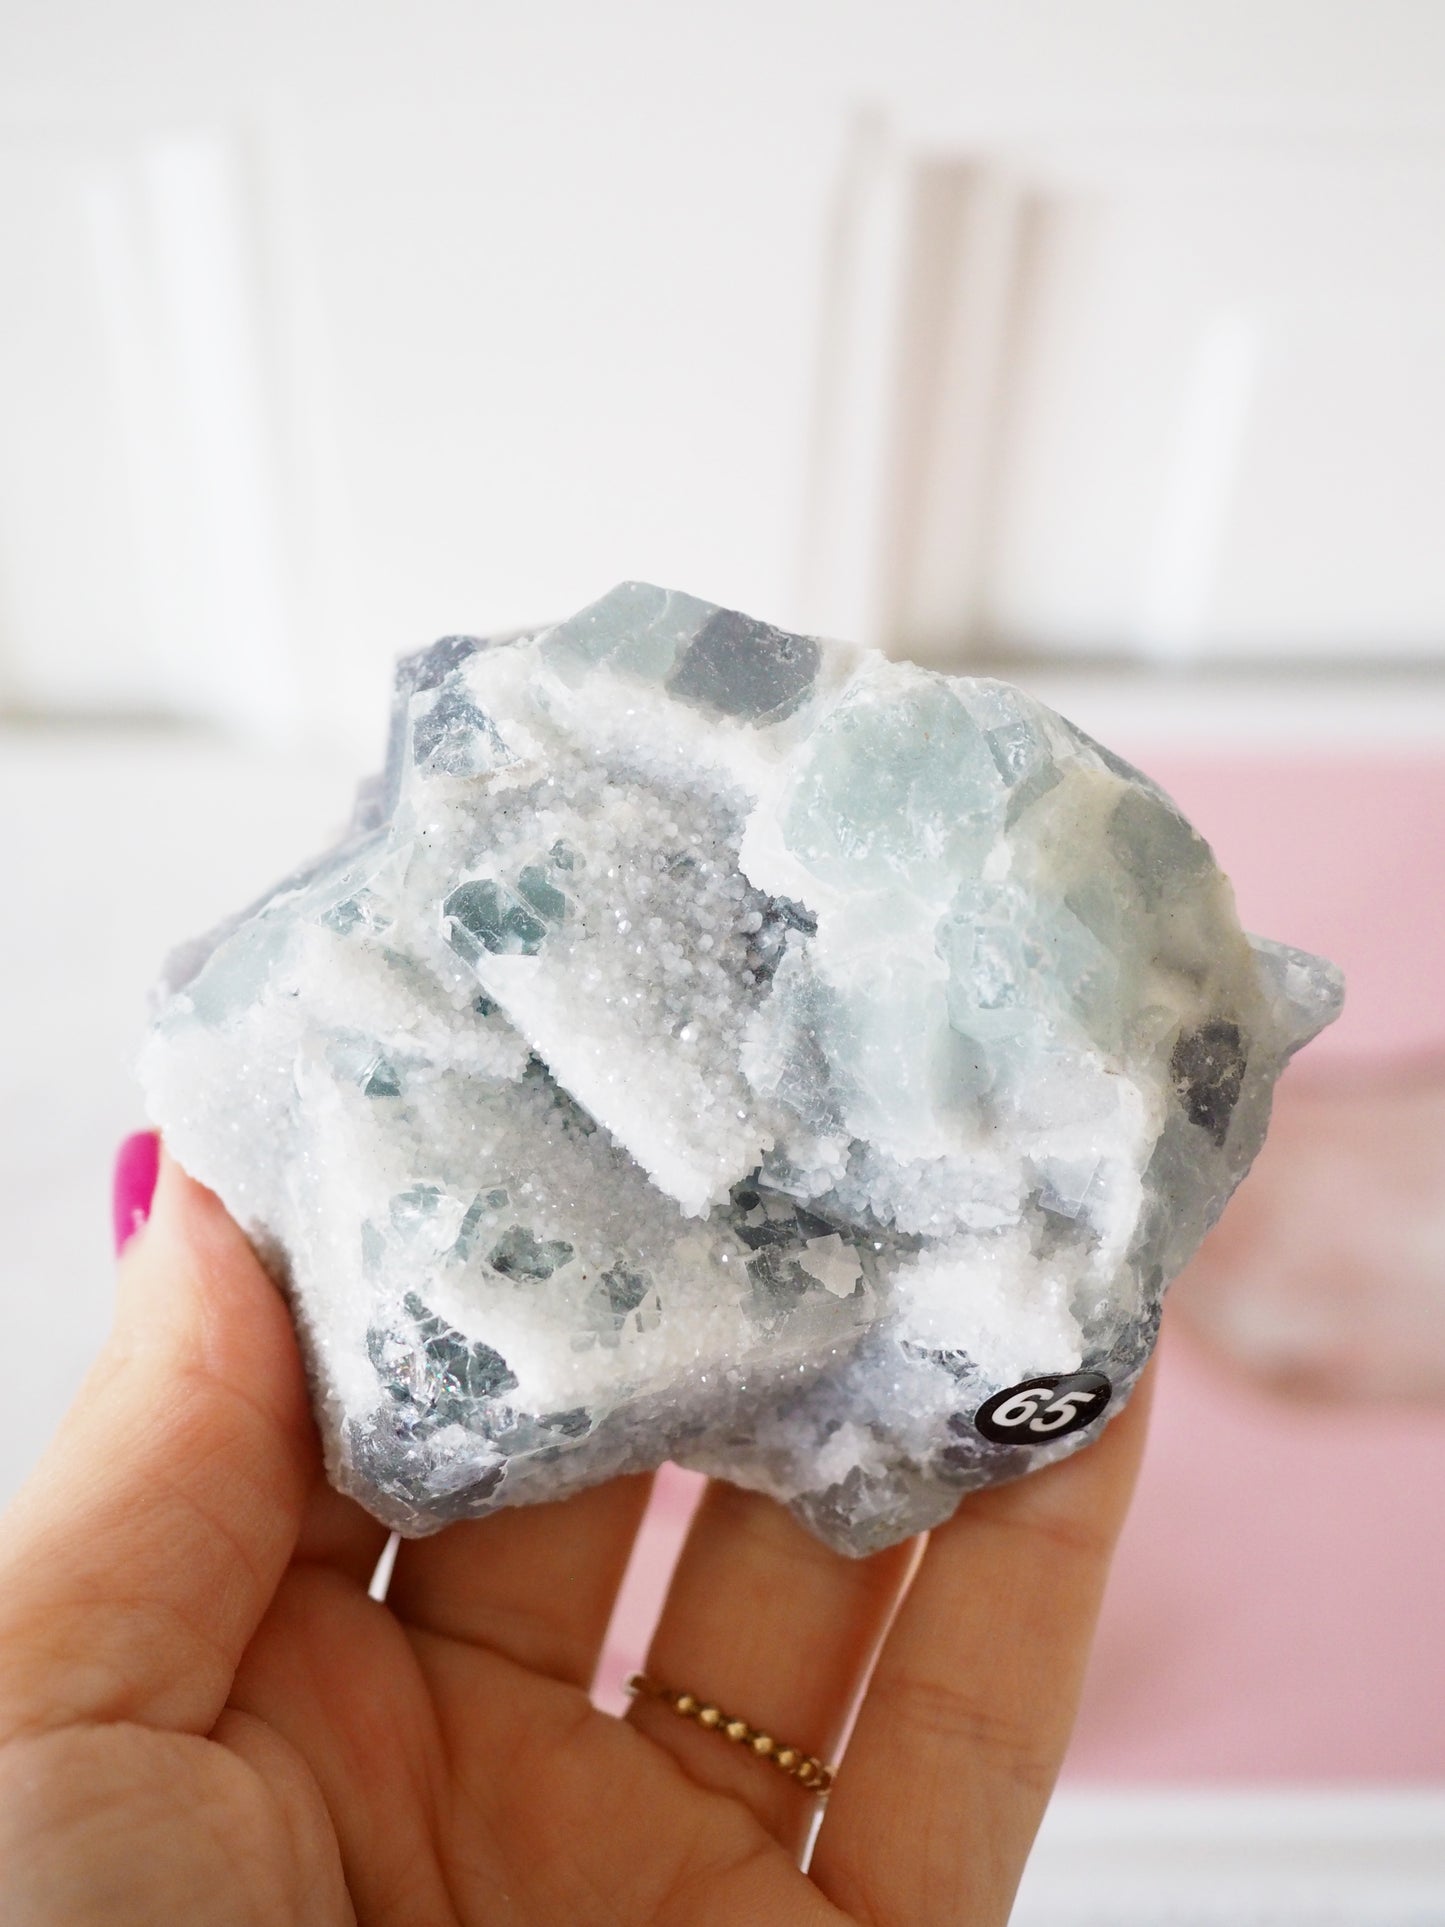 Sparkly Druzy Sugar Fluorit [65] ca. 8.5cm - aus Fujian China RARE